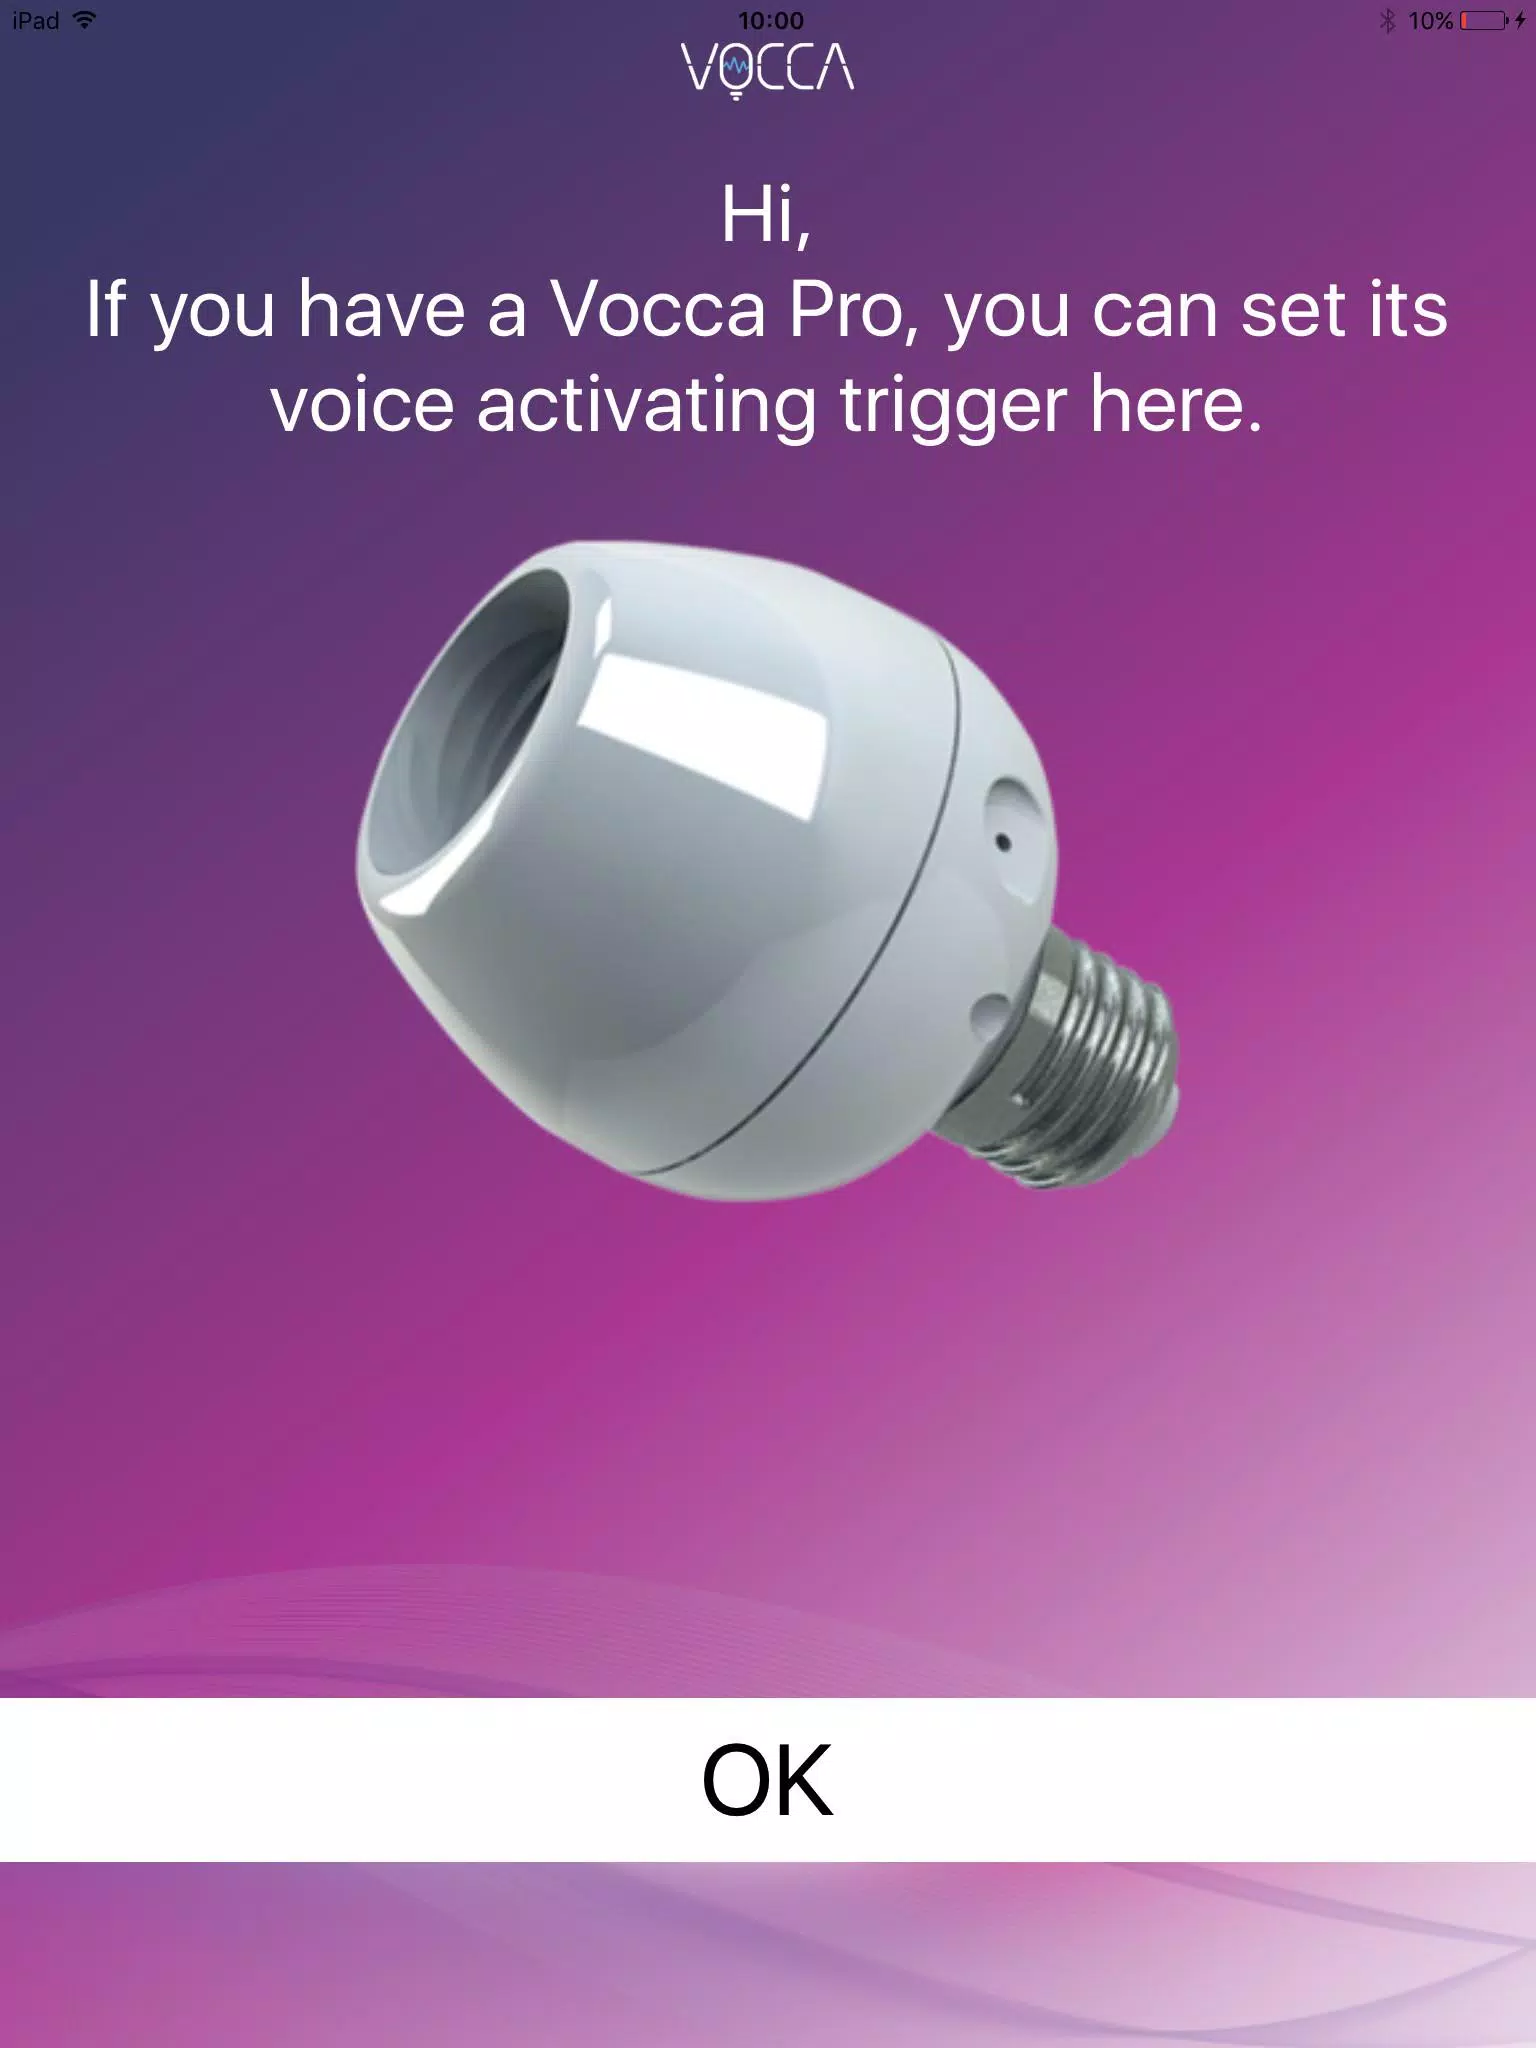 VOCCA PRO APK Android Download